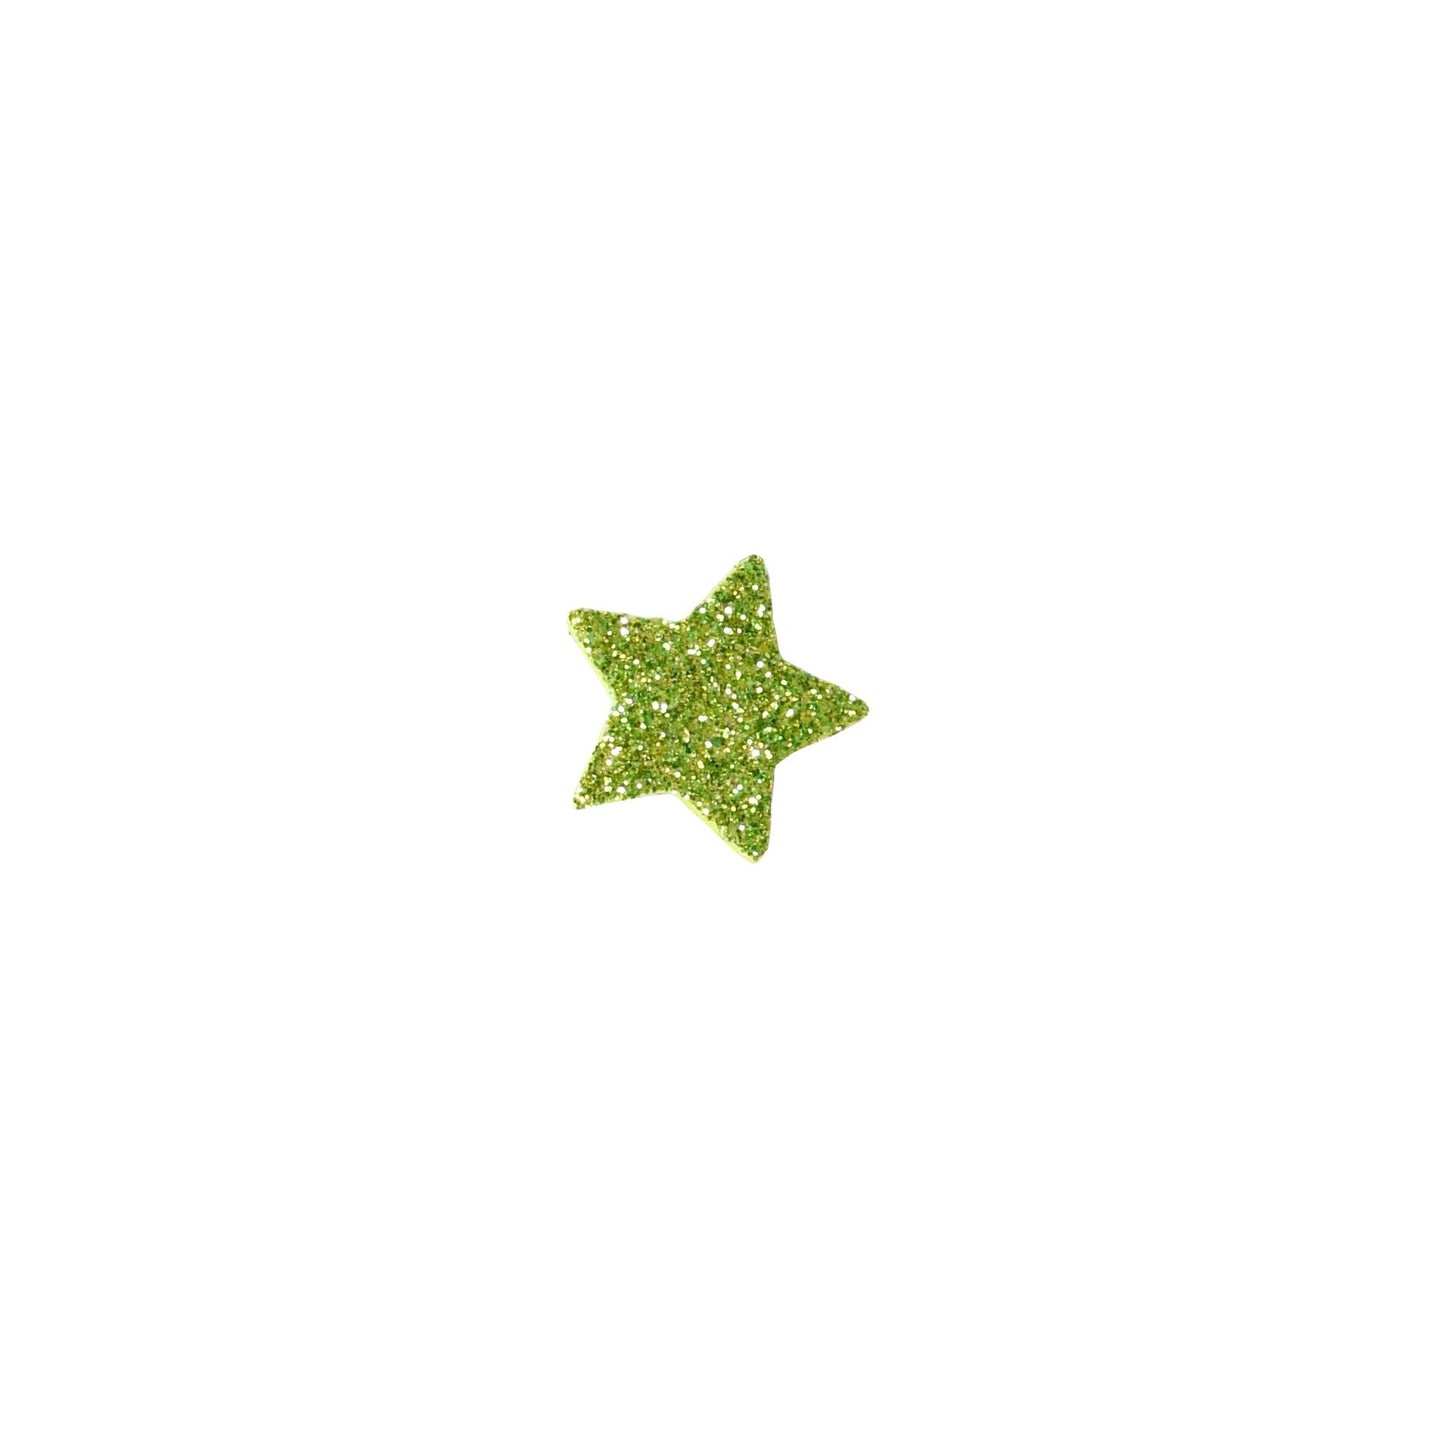 Glitter Foam Stickers - Stars - Multicolor, 168 Per Pack, 3 Packs - Loomini